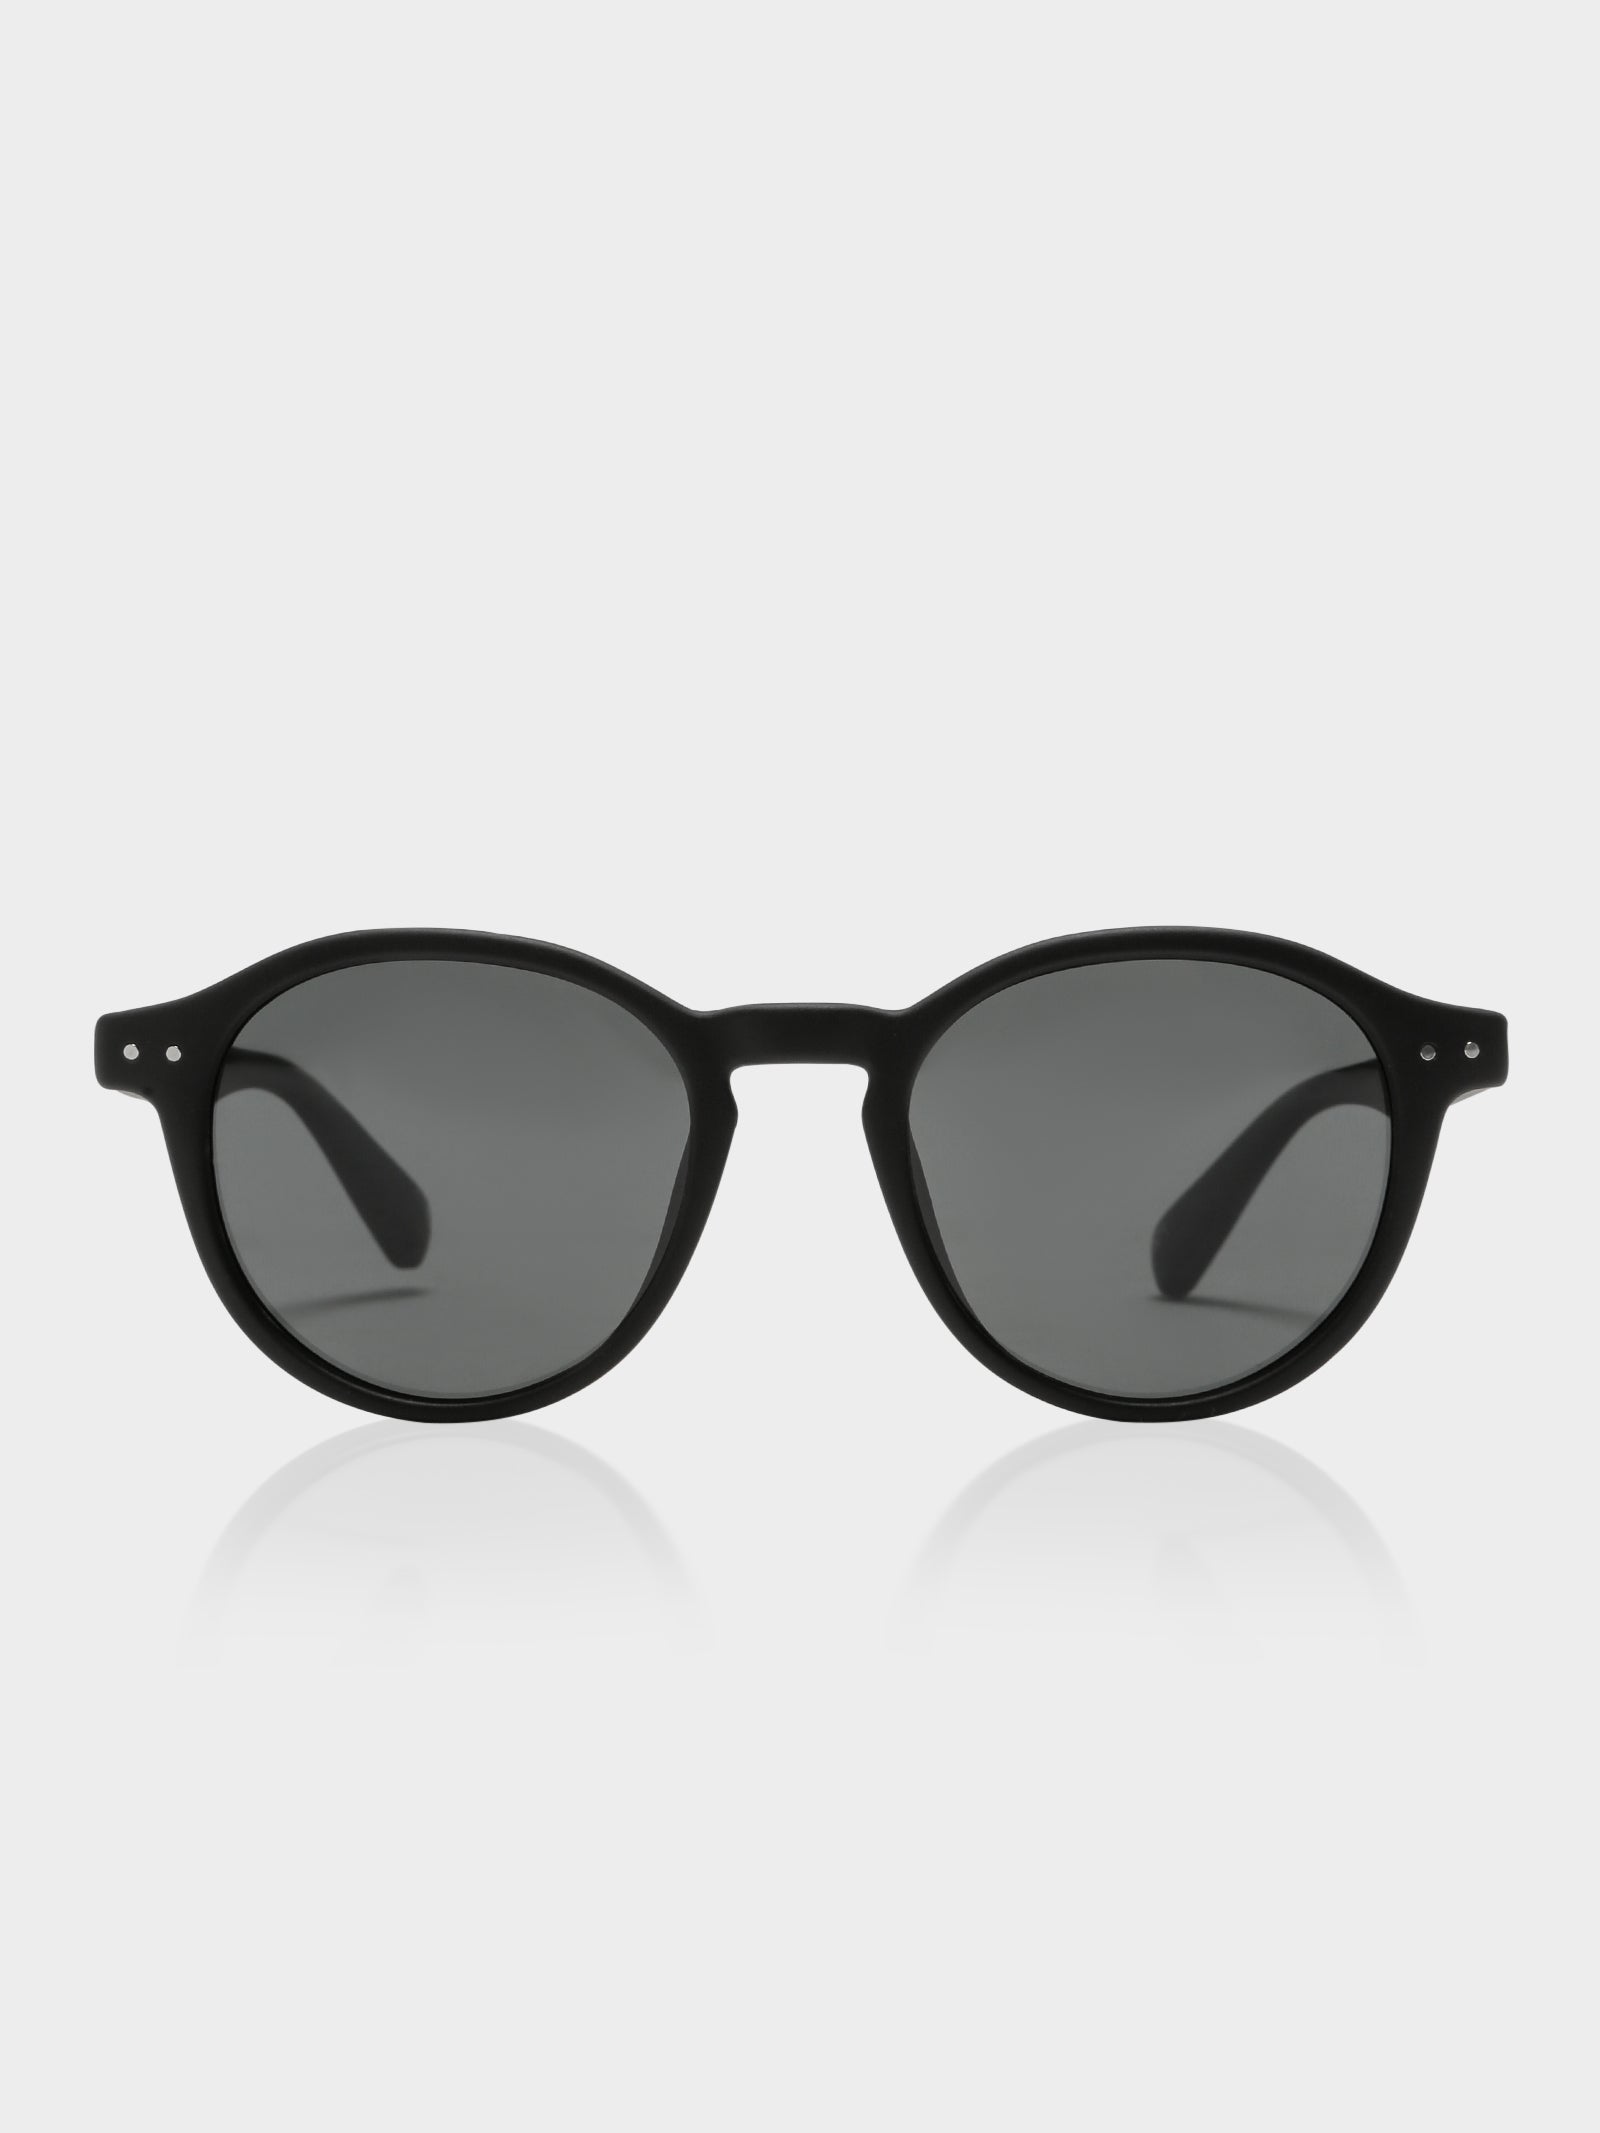 Buy Carve 1303 Black Sanchez Square Sunglasses Polarised Lens Category 3  Lens Mirro at Amazon.in